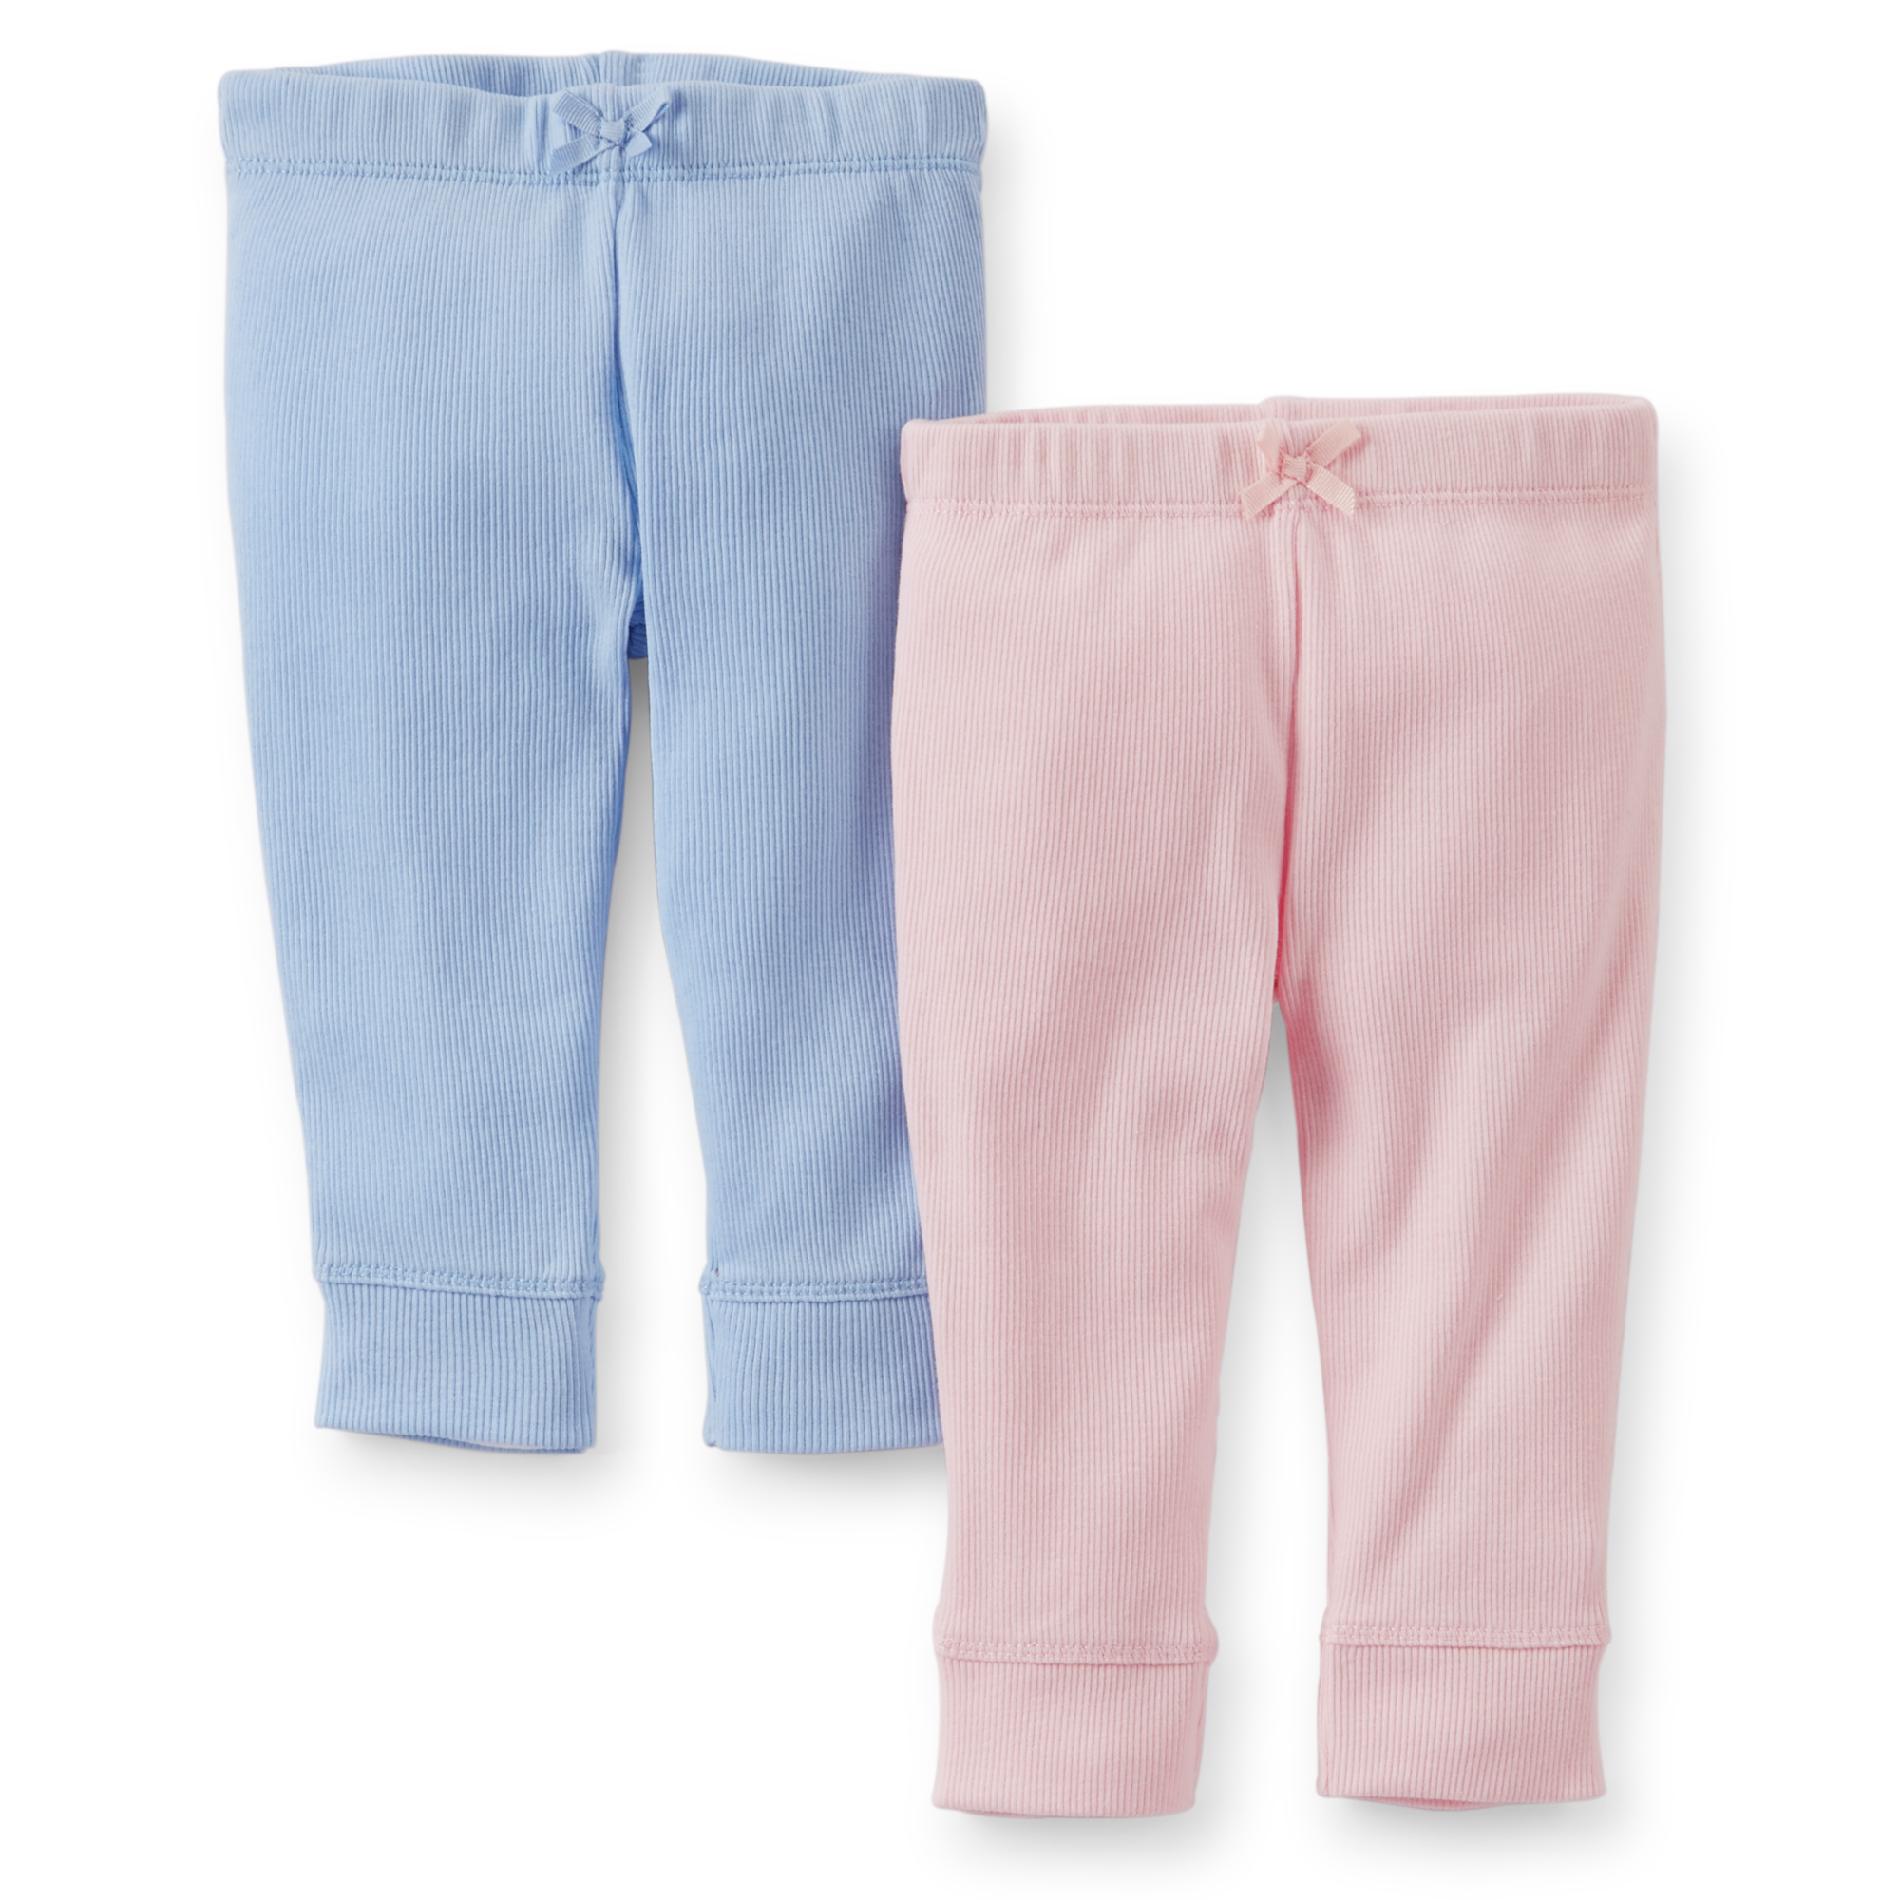 Carter's Newborn & Infant Girl's Set of 2 Stretch Pants.